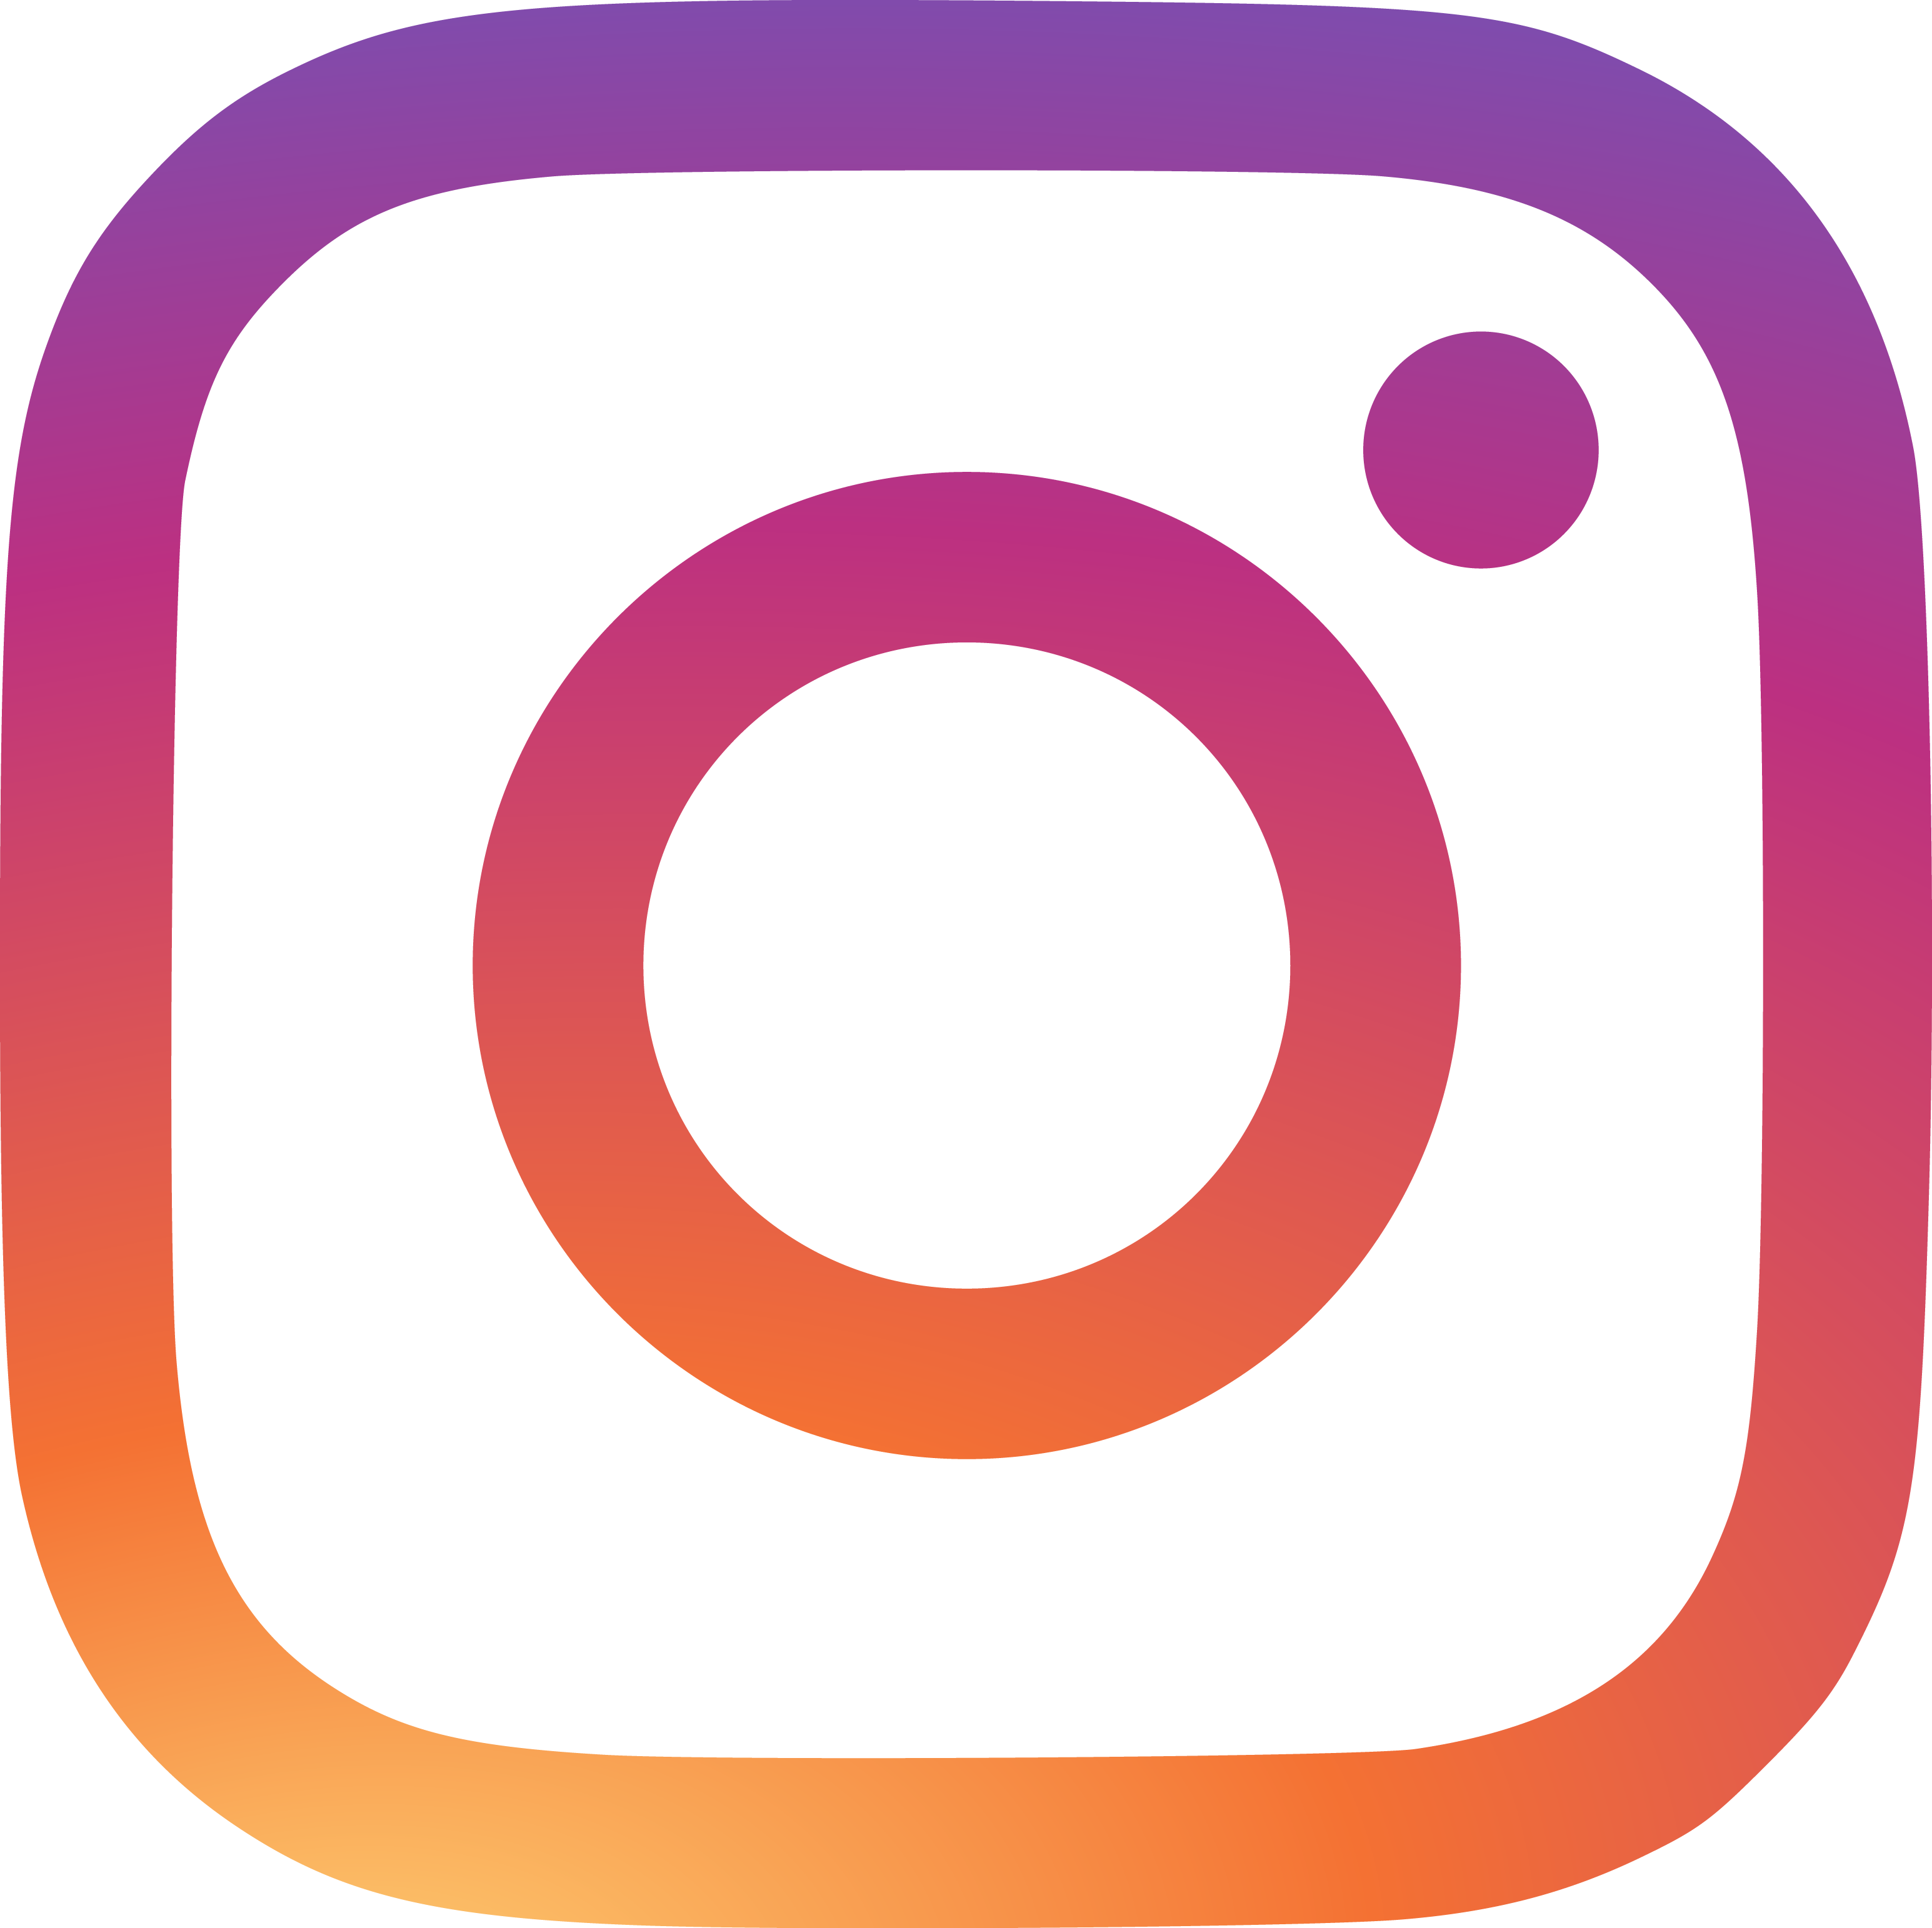 Instagram Logo [new] Vector Eps Free Download, Logo, - Instagram Logo